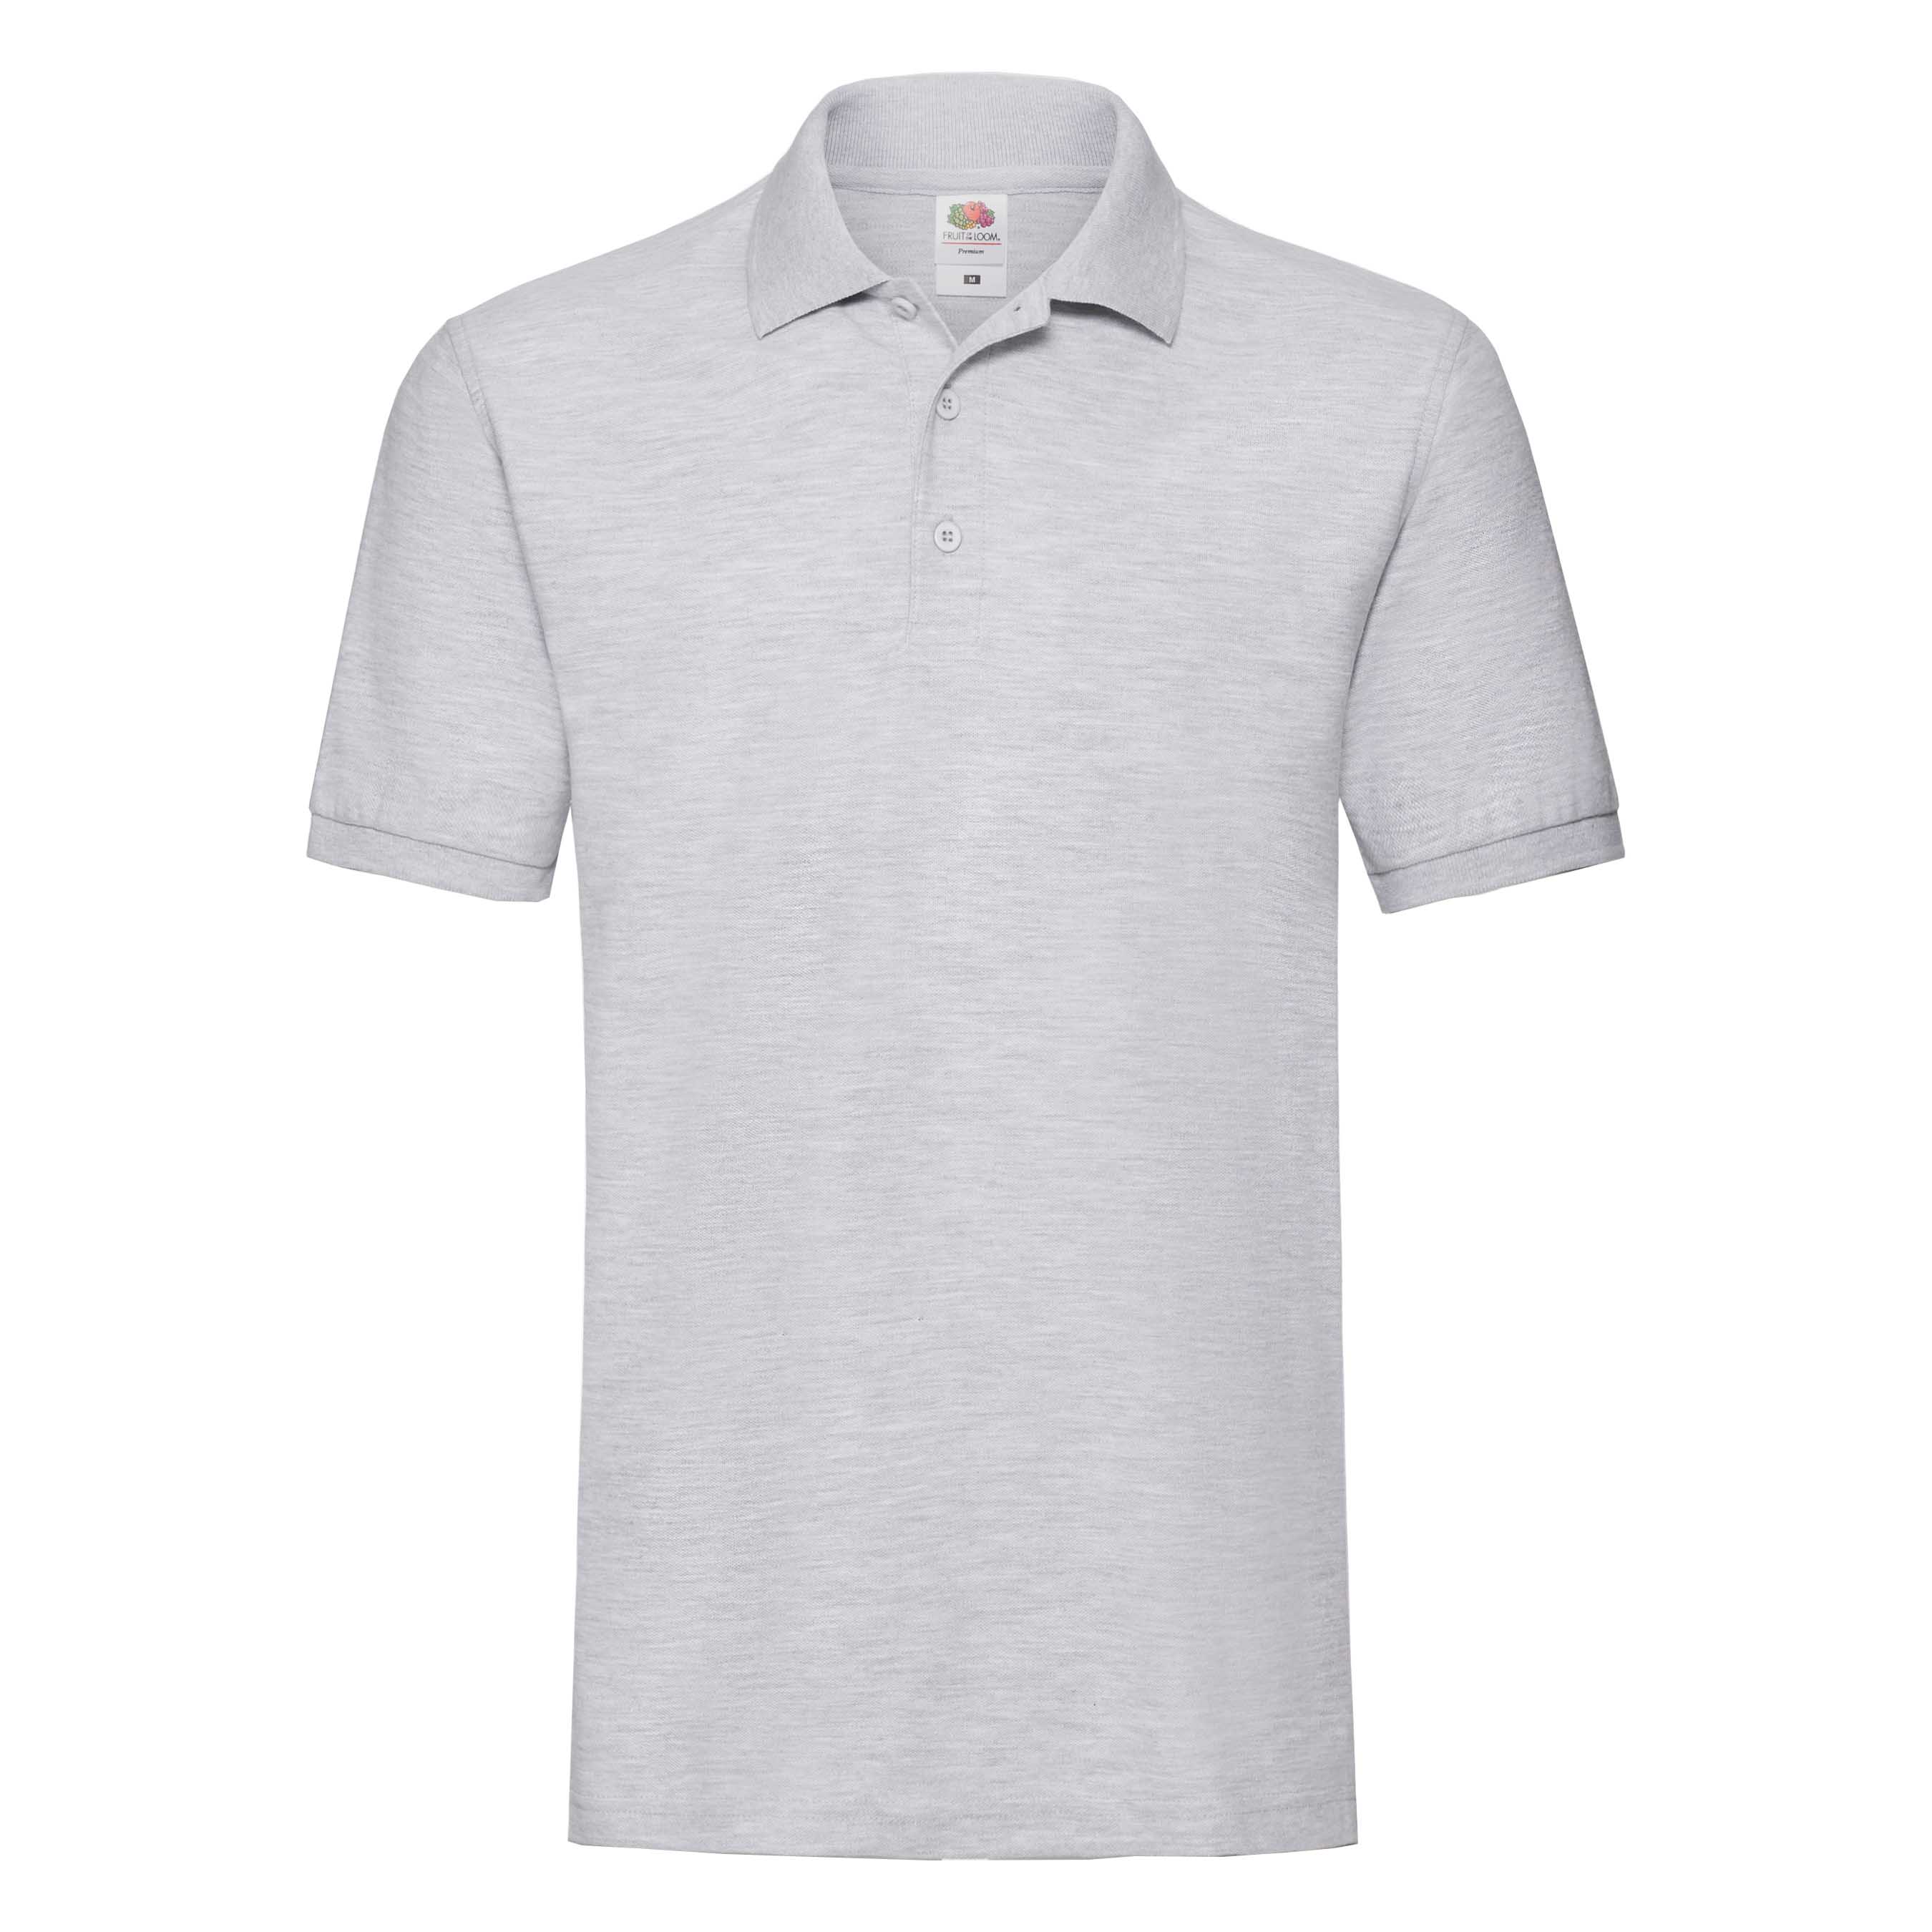 Koszulka Męska Premium Polo 632180 100% Bawełna 170g/180g